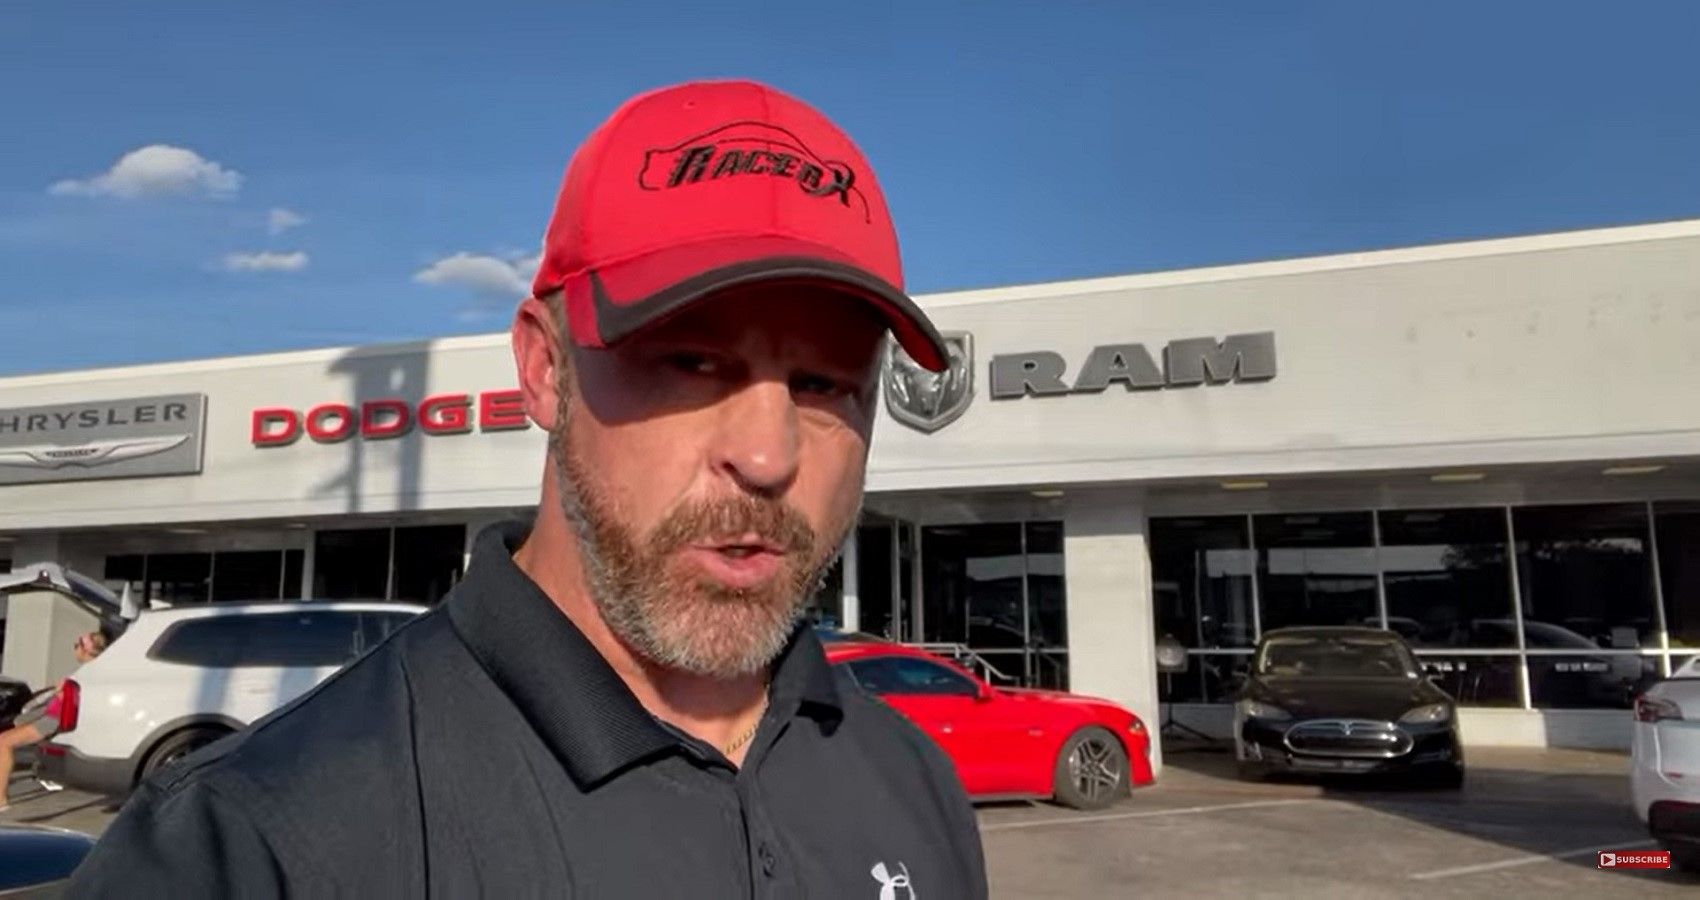 RacerX at Tampa Dodge dealership, shot of man infront of building